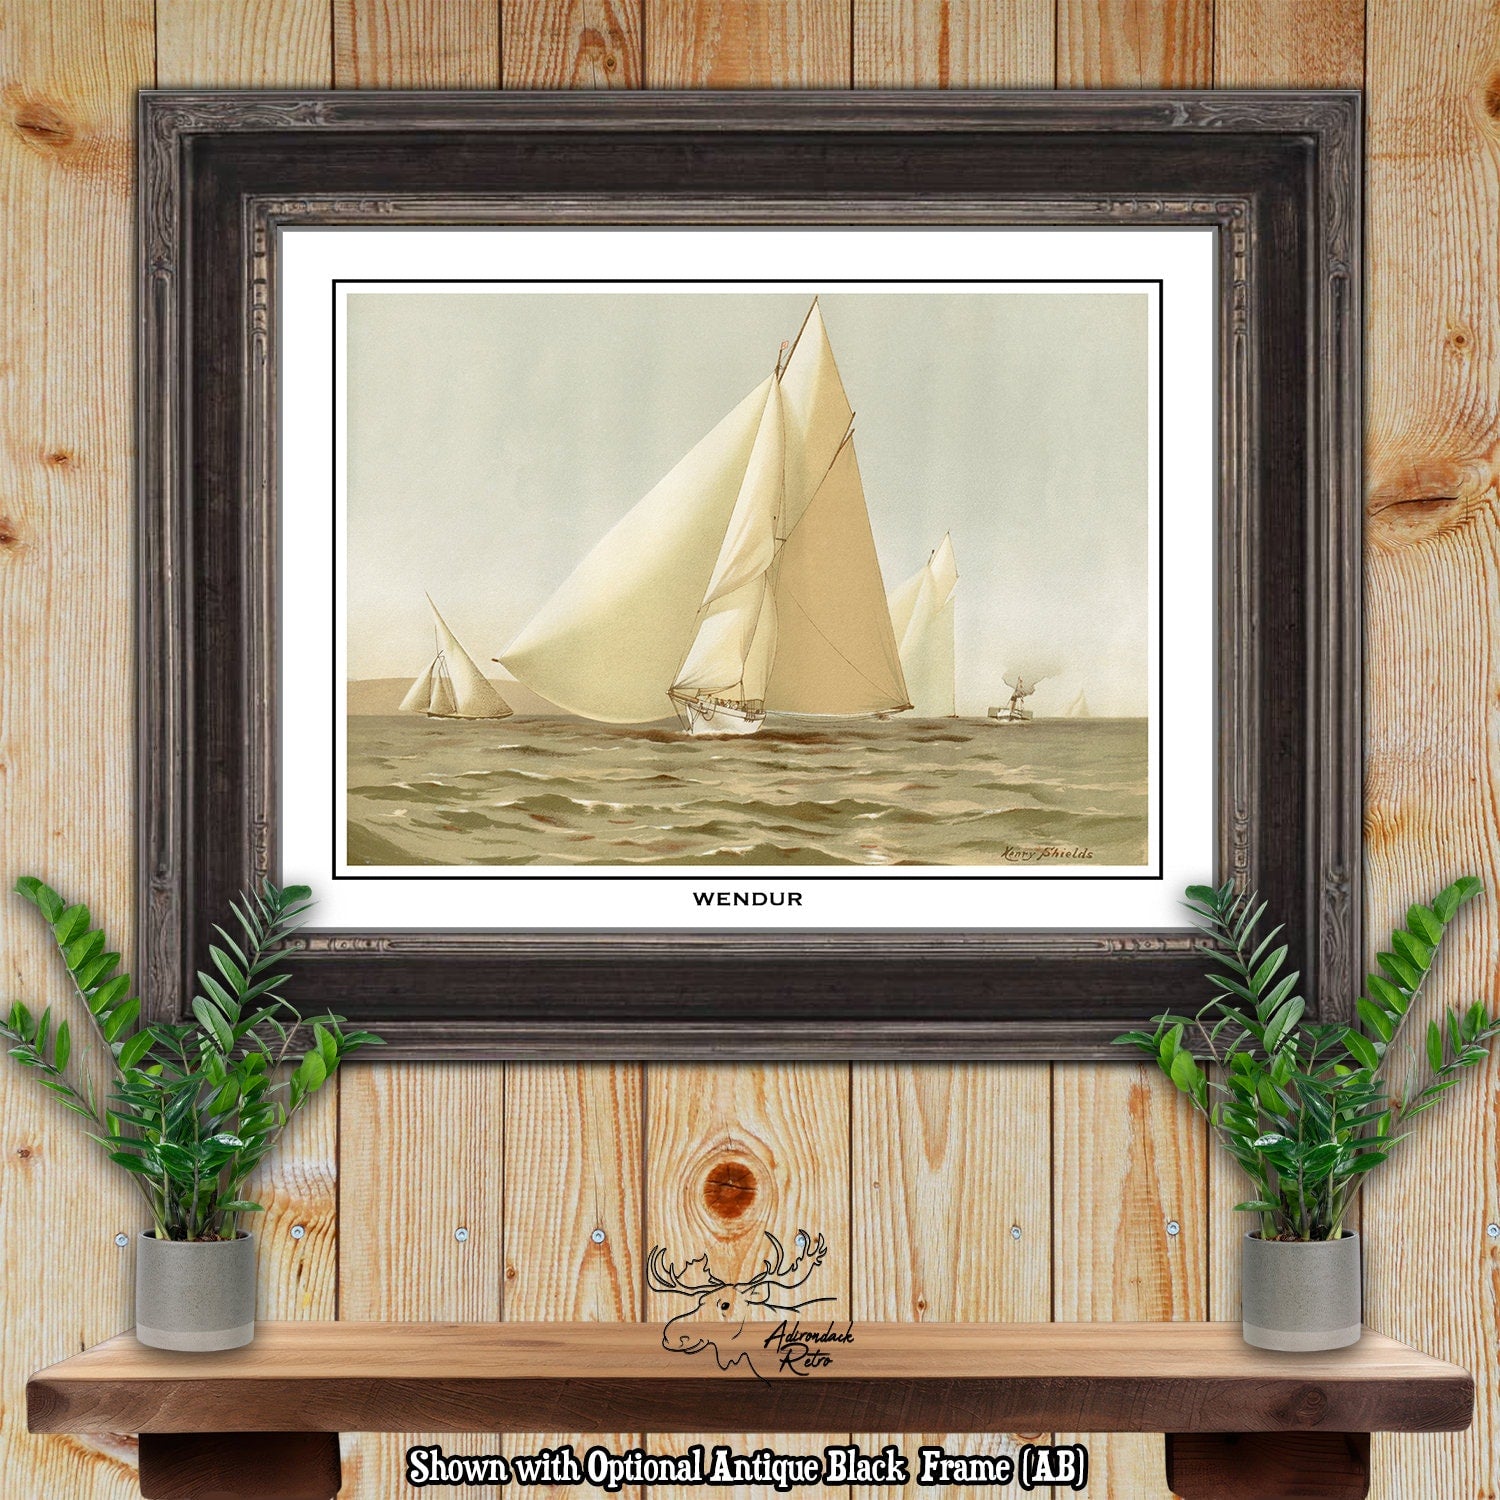 Clyde Yacht Wendur by Henry Shields Giclee Fine Art Print at Adirondack Retro